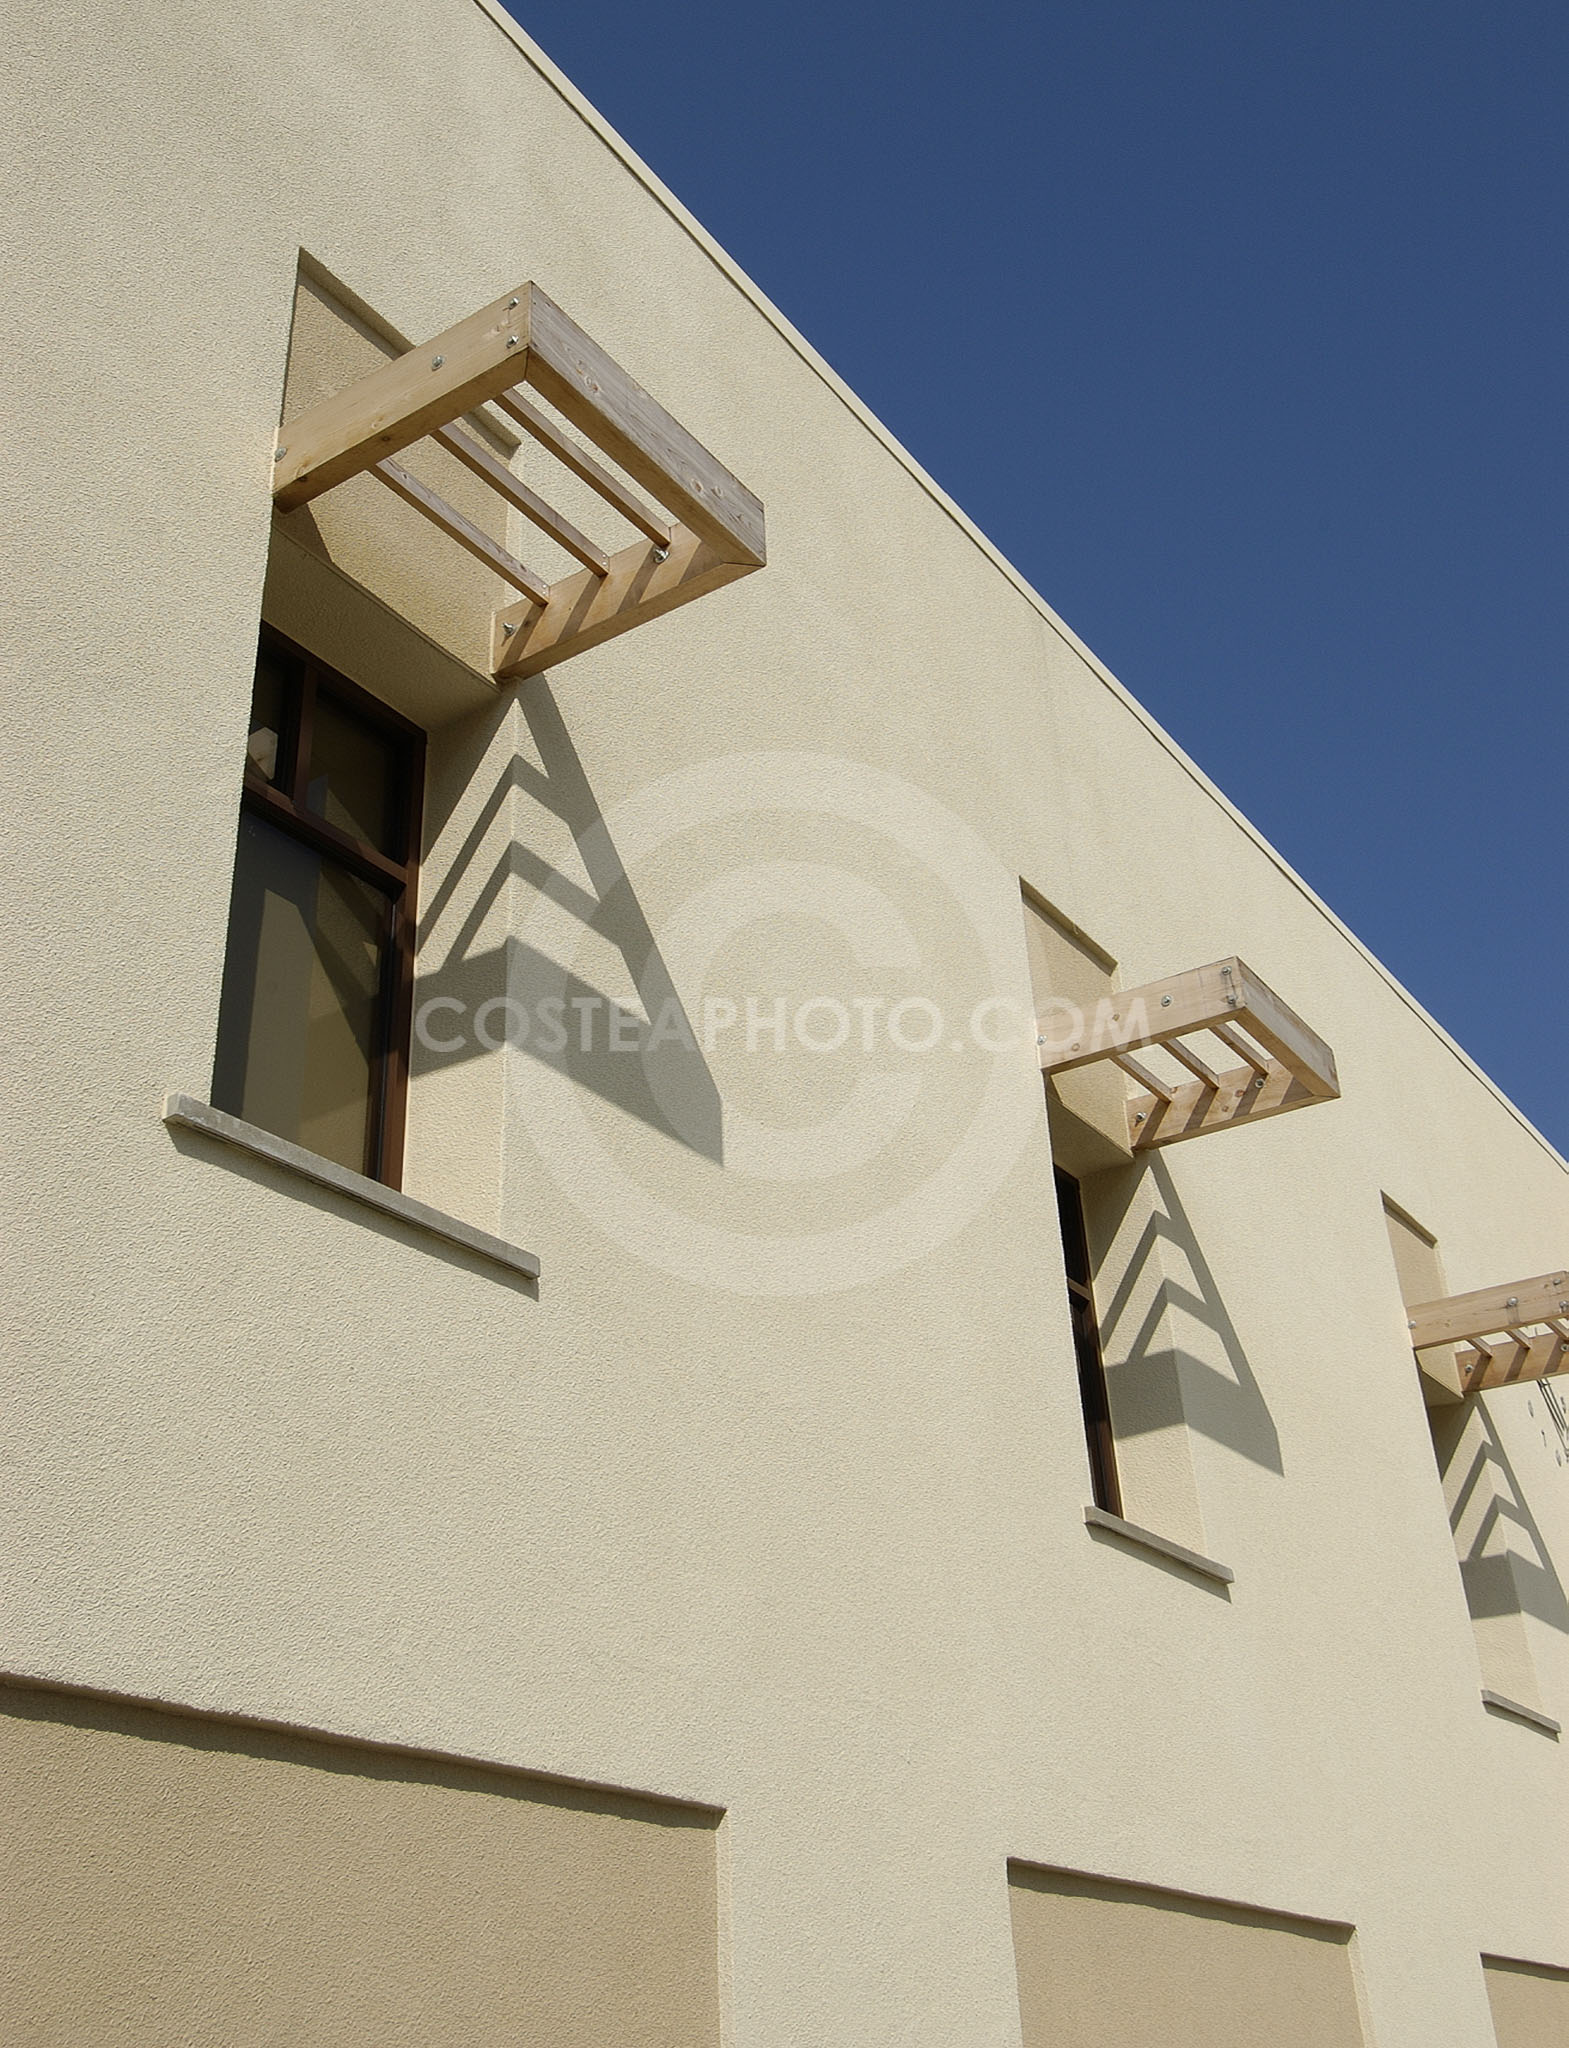 Window shade vertical (Up Shot)